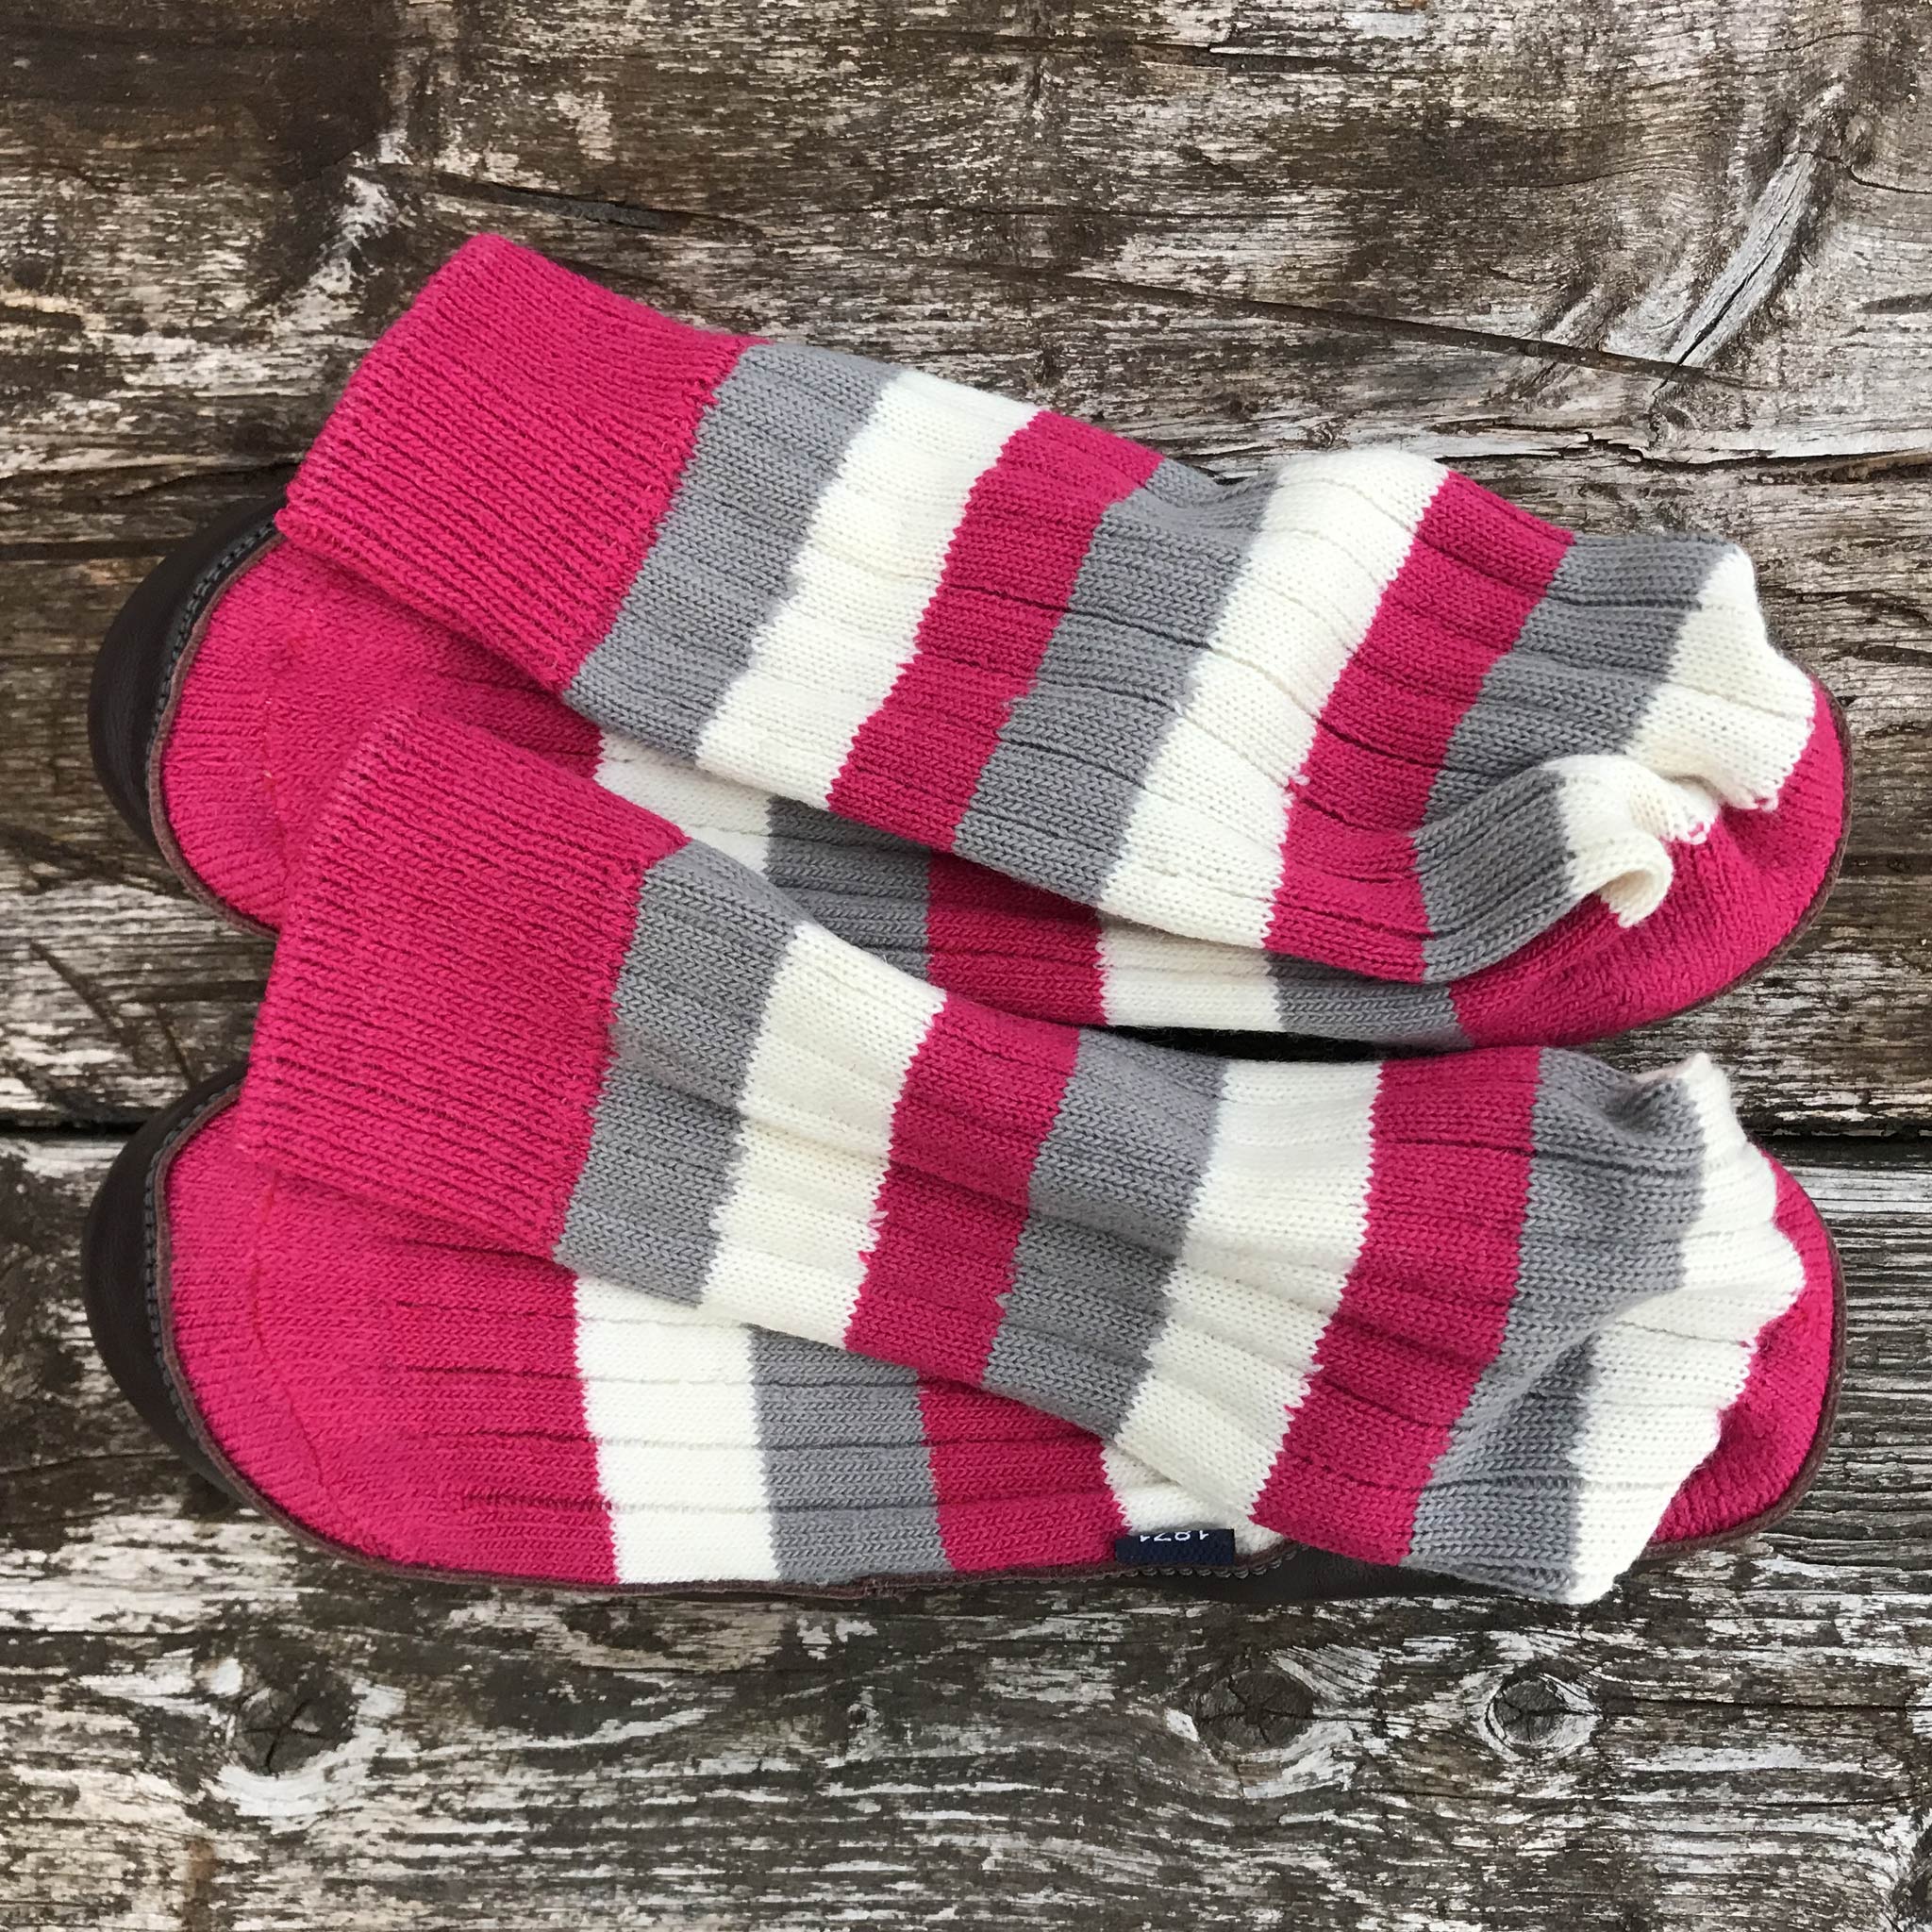 Slipper Sock raspberry, grey and white stripe - overhead view